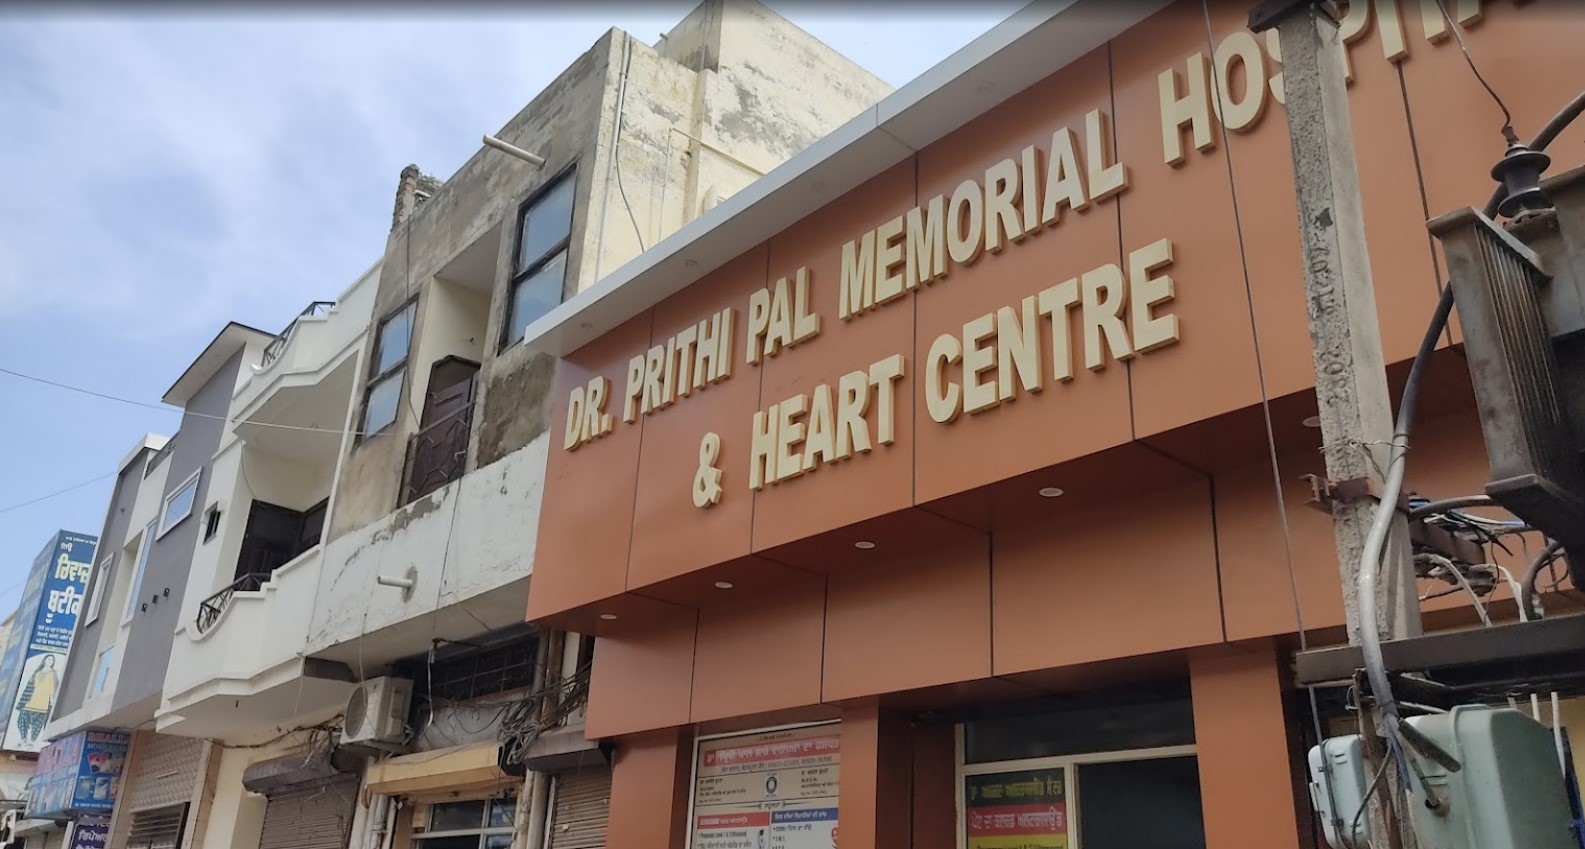 Dr. Prithipal Memorial Hospital